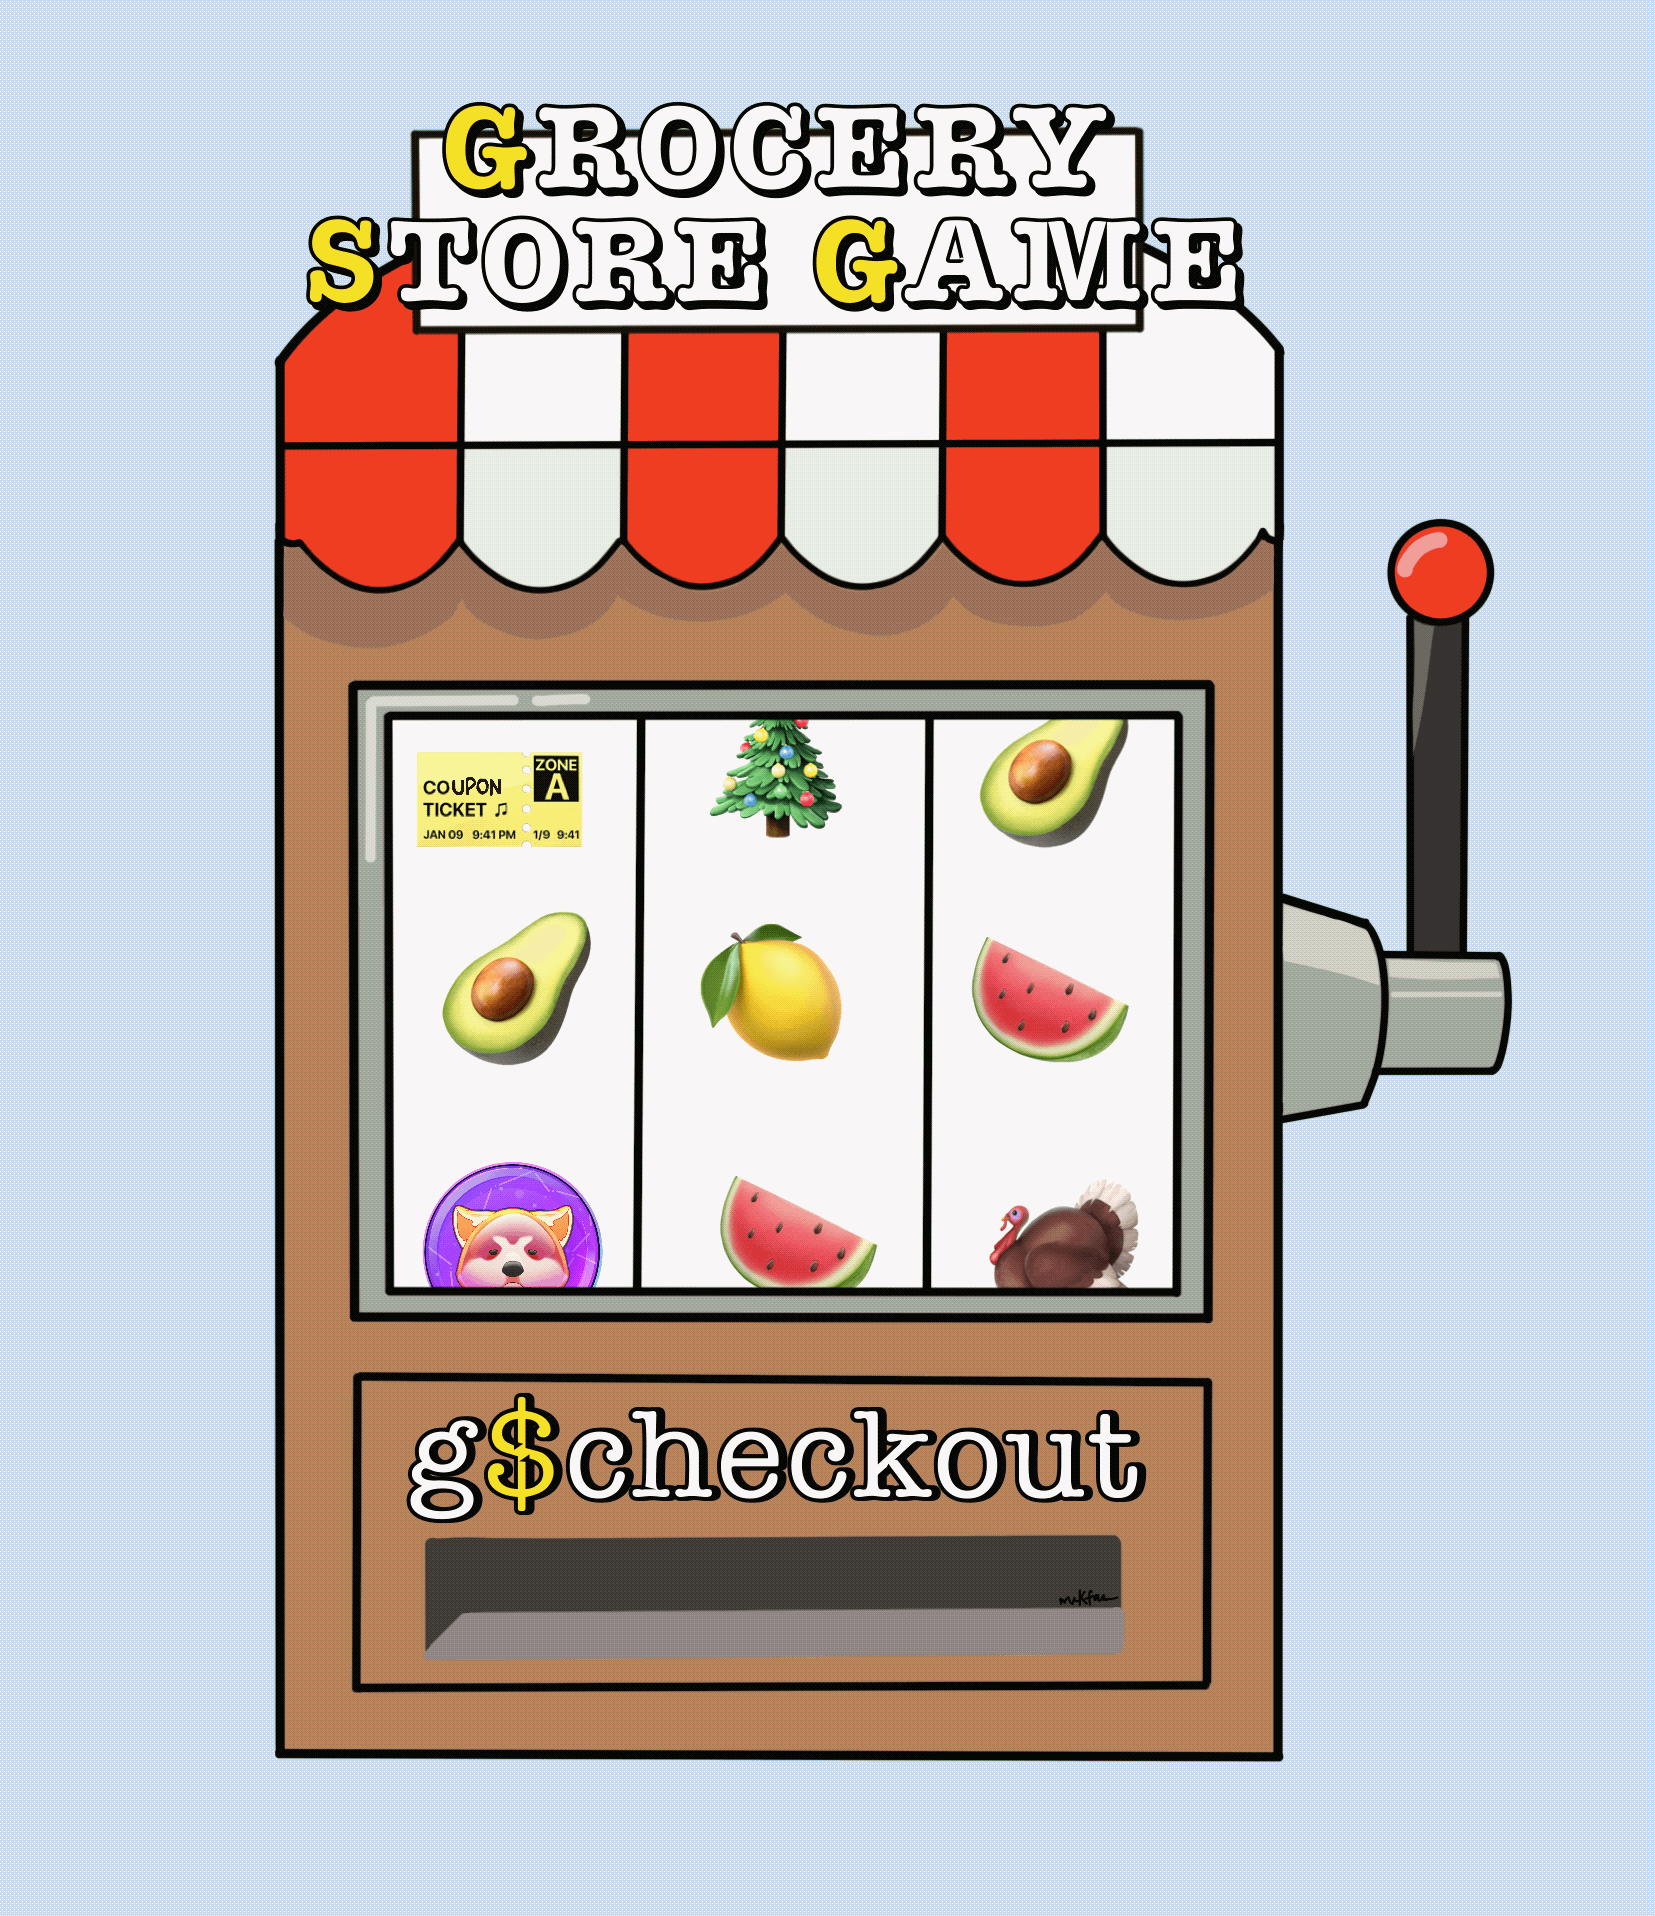 Grocery Store Game: Slot Machine